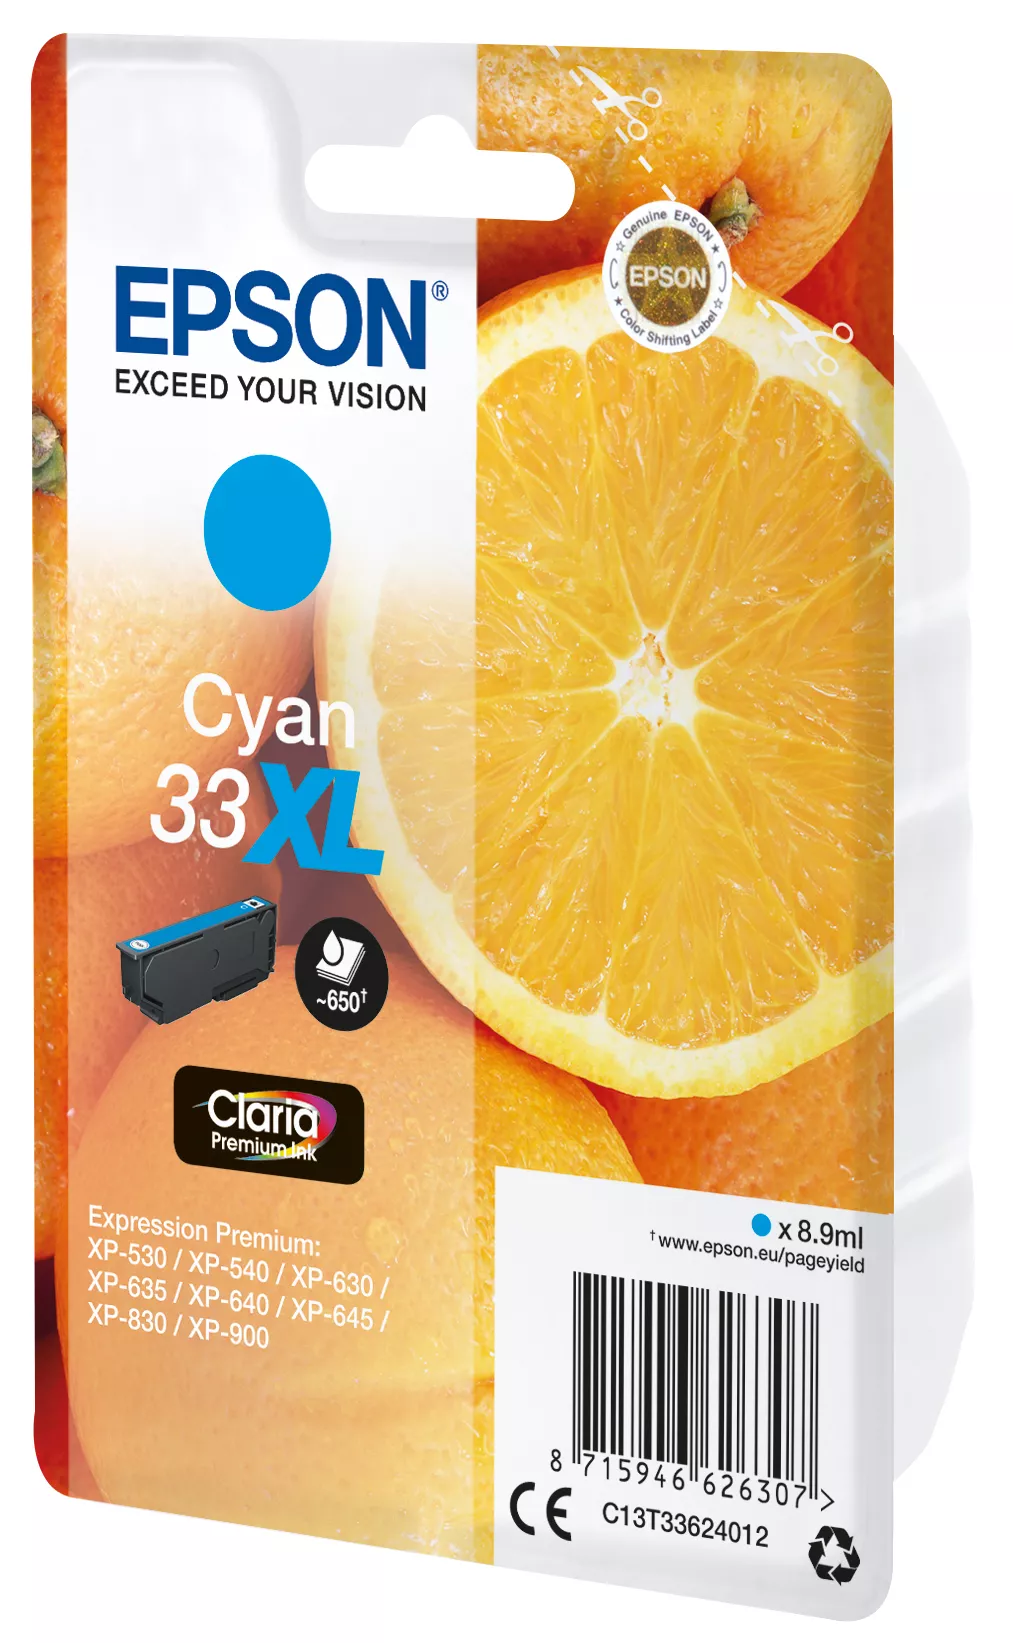 Vente Epson Cartouche "Oranges" - Encre Claria Premium C Epson au meilleur prix - visuel 2